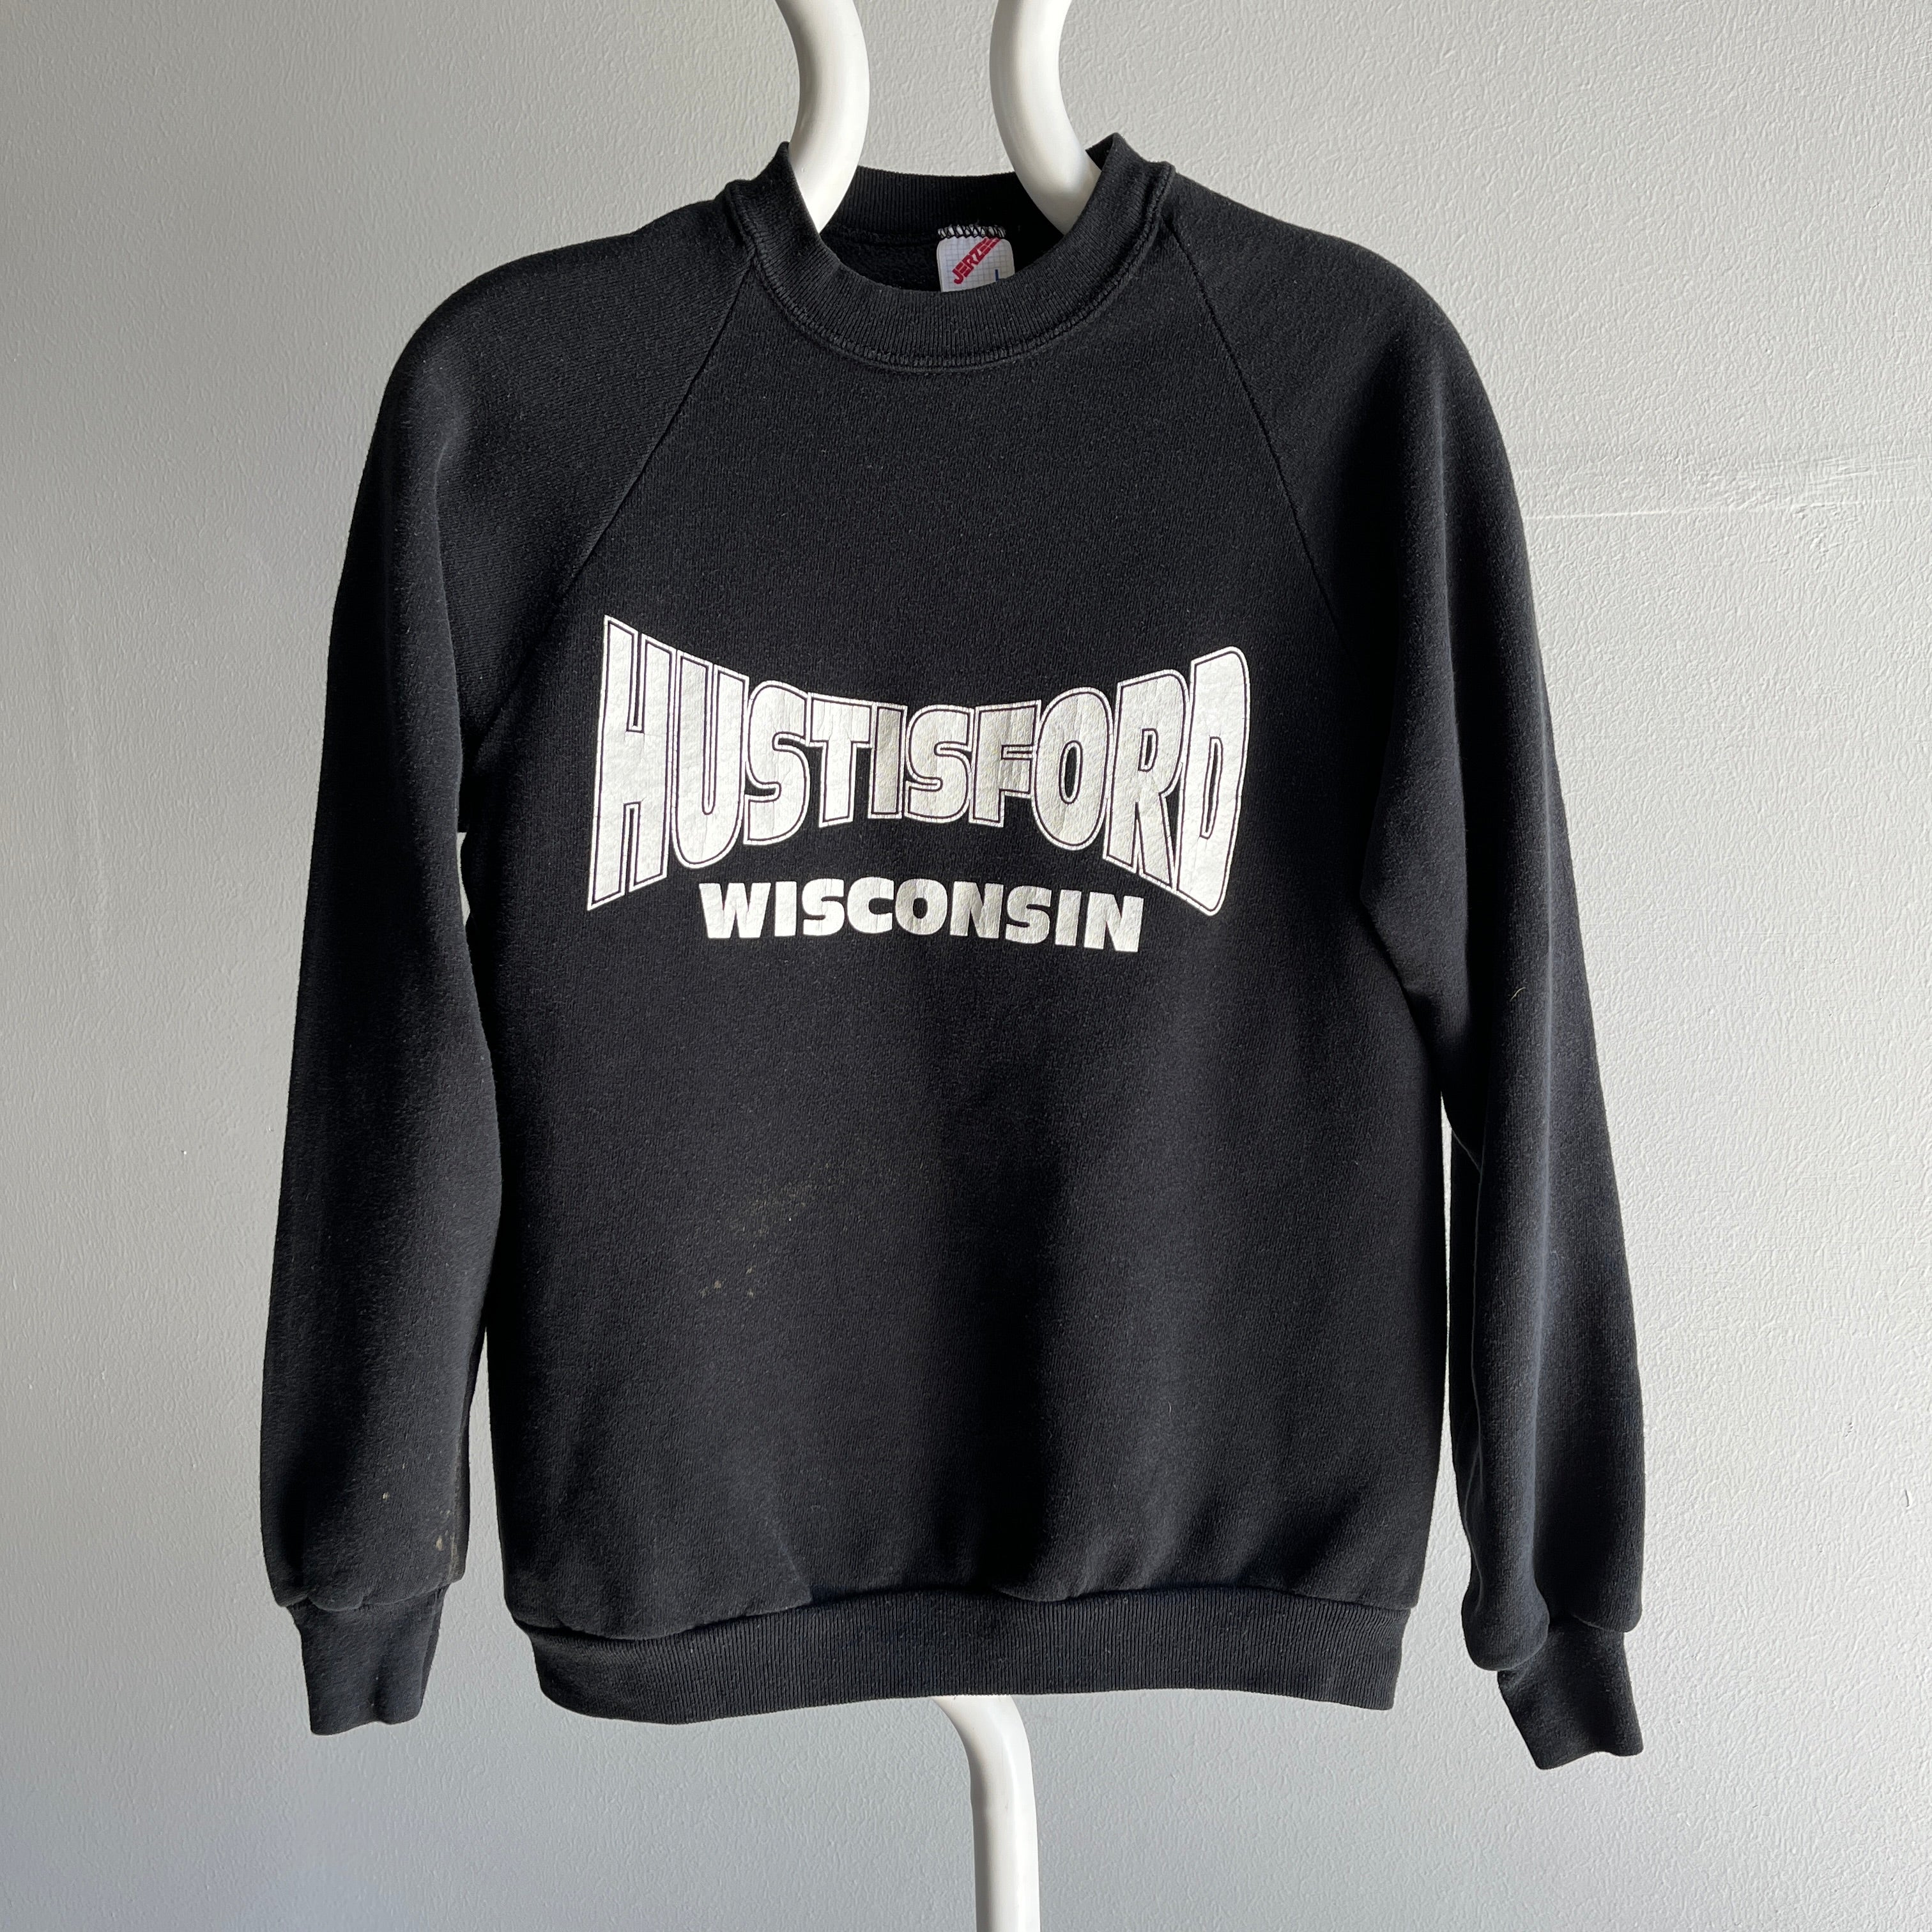 1980s Hustiford, Wisconsin Tourist Sweatshirt Done Right!